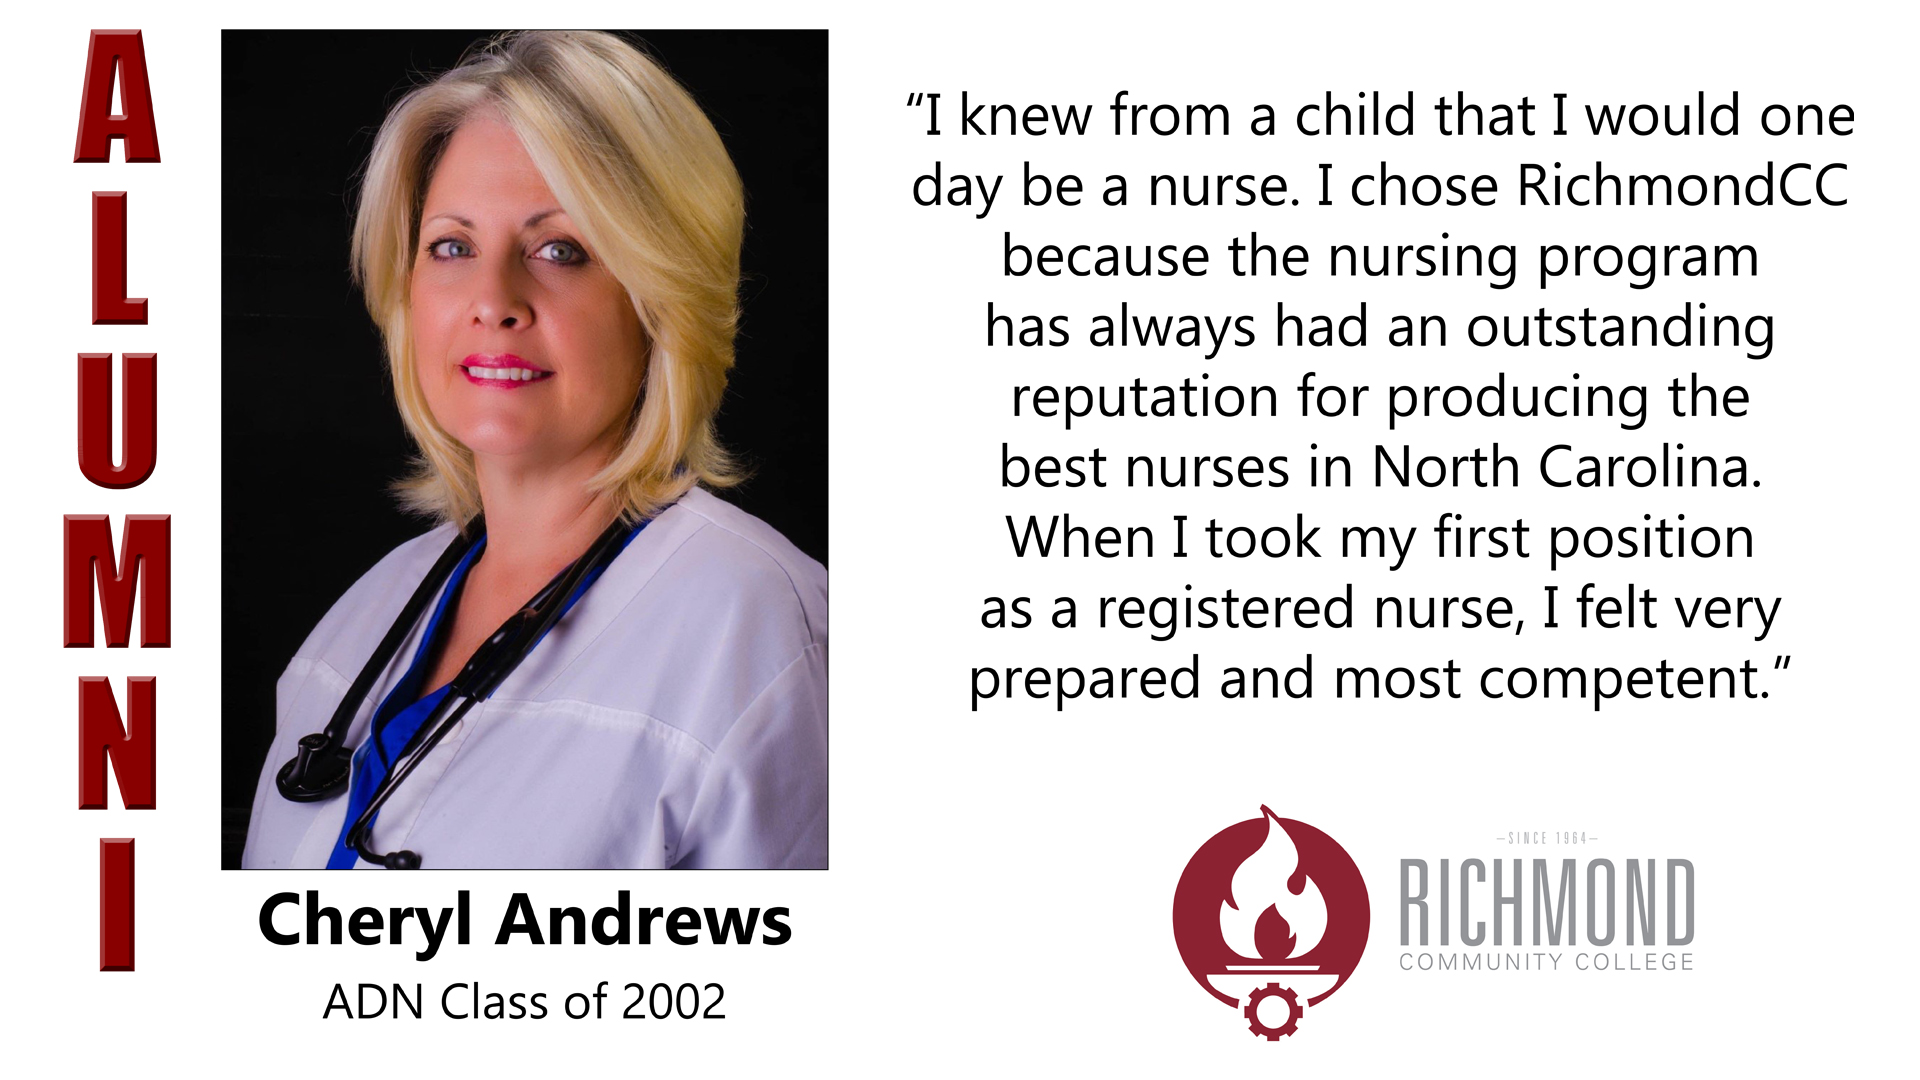 Alumni photo of registered nurse Cheryl Andrews